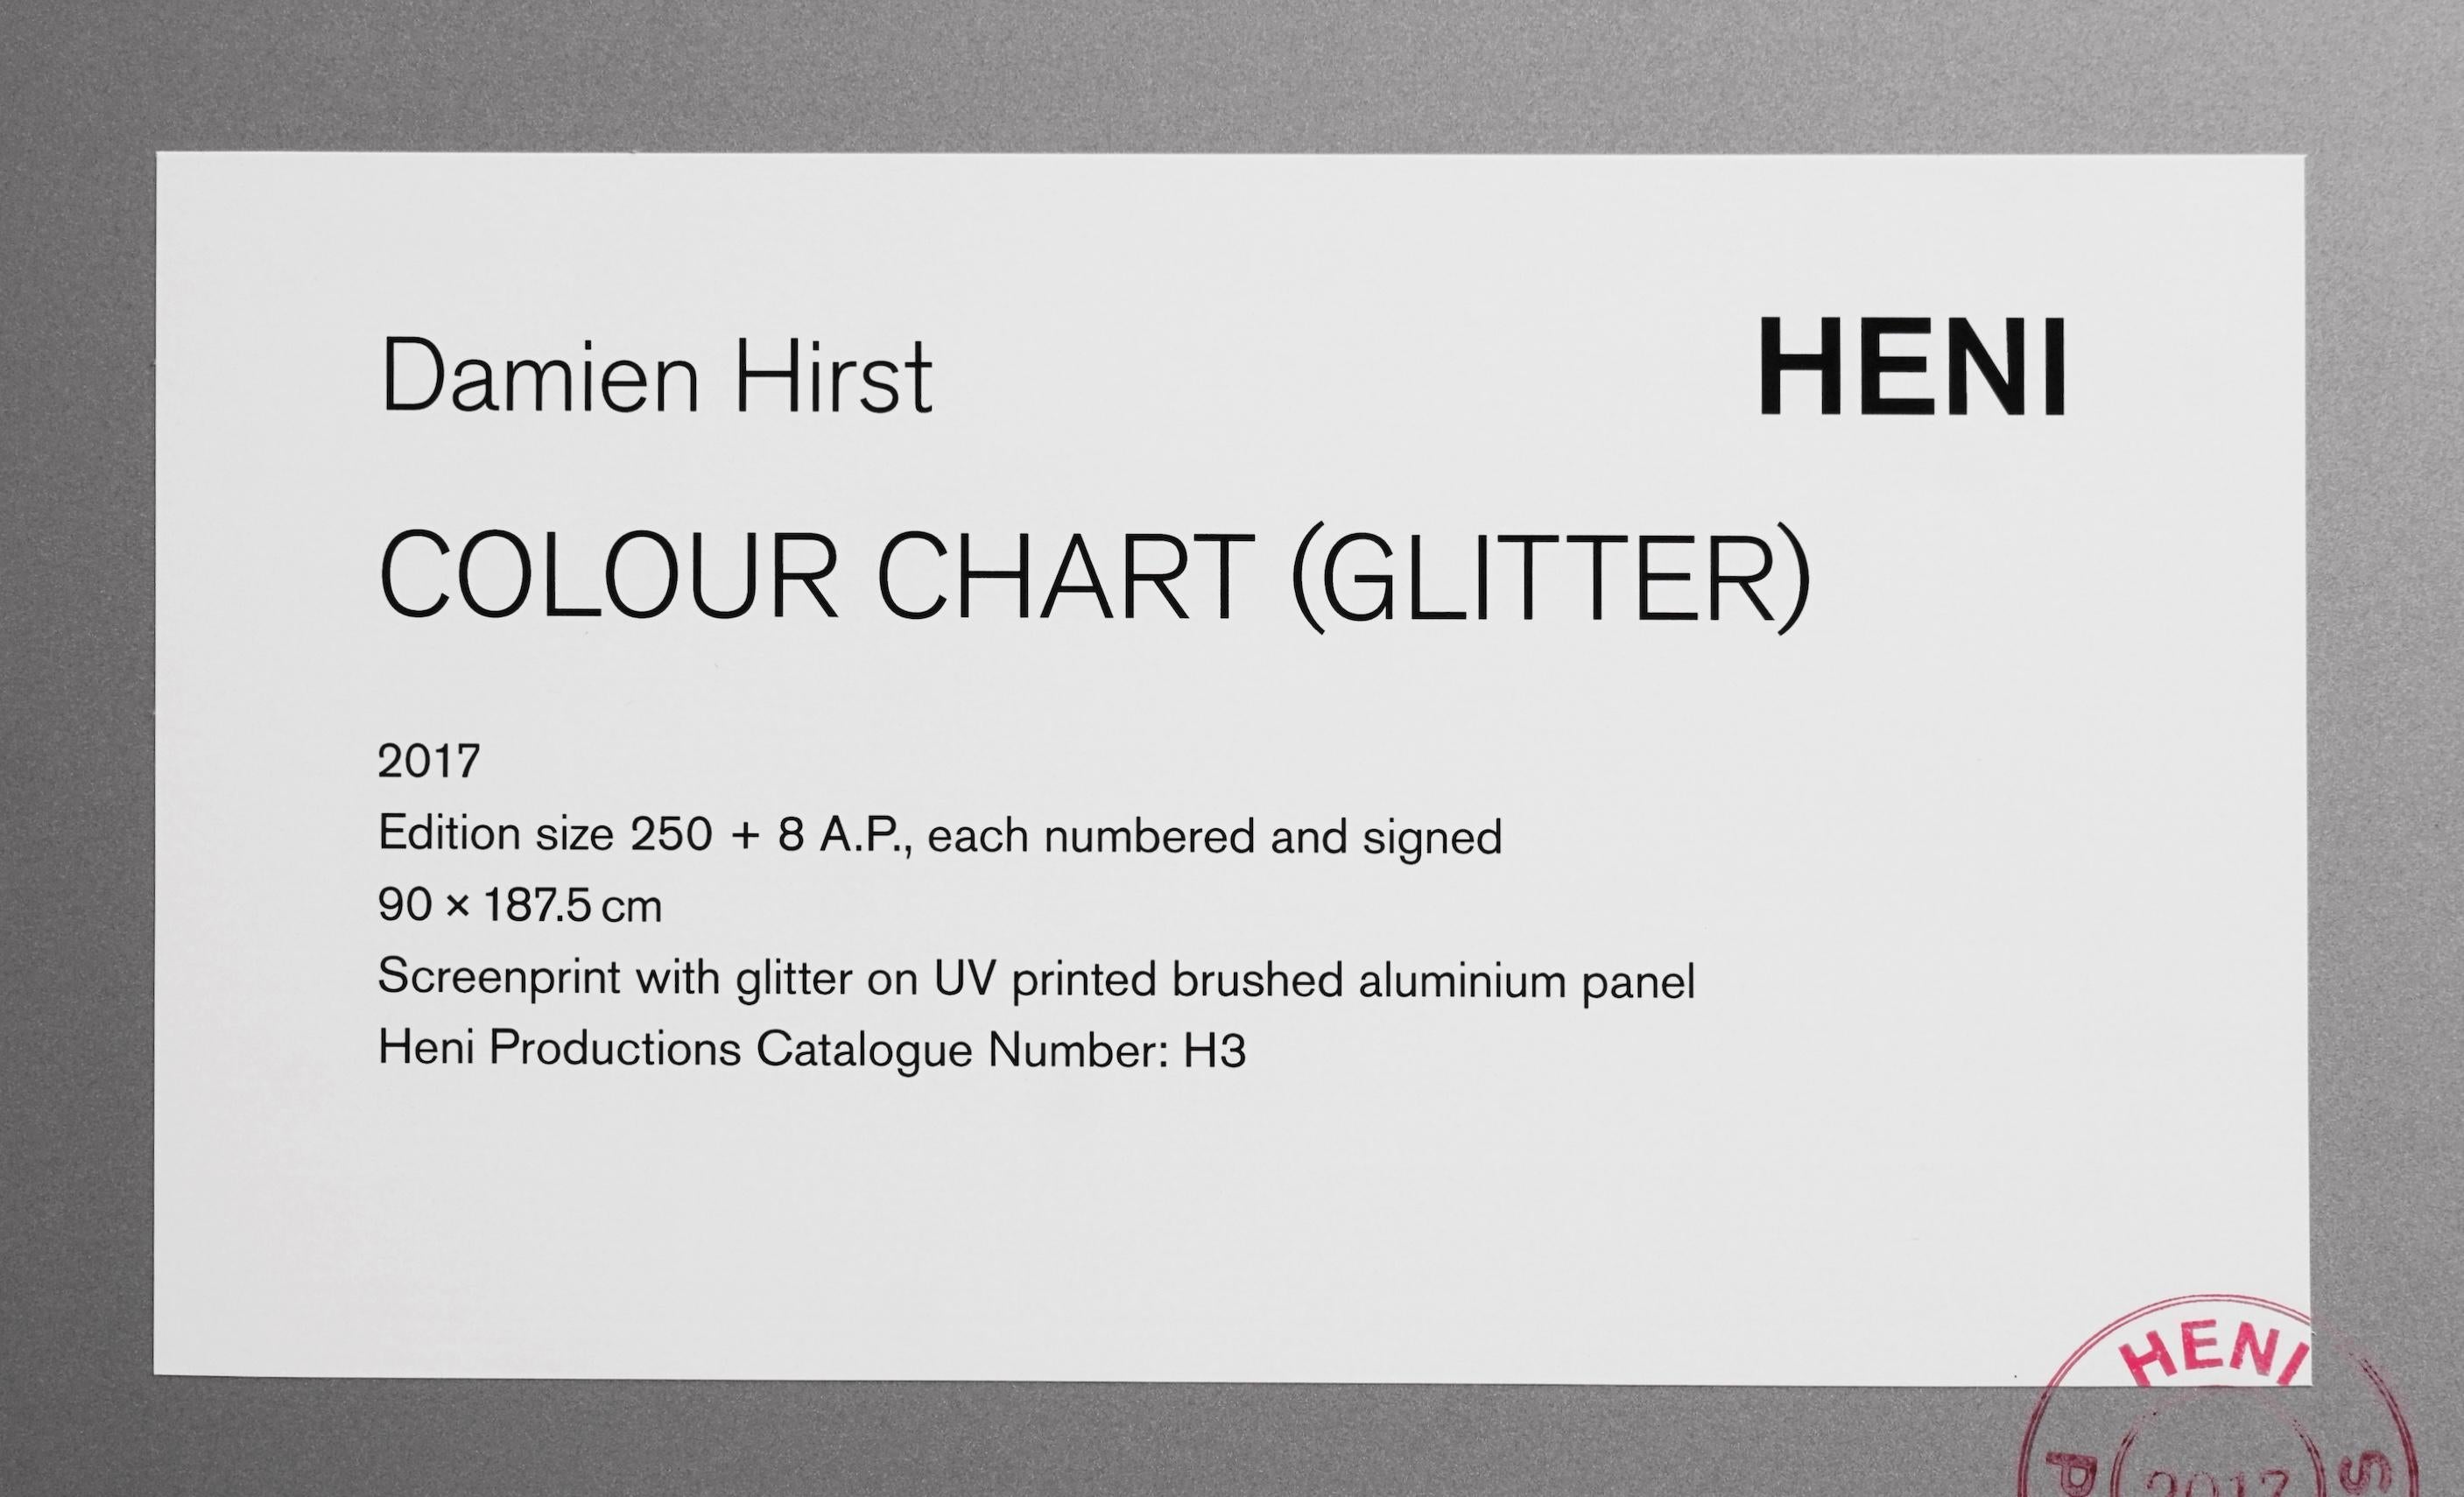 Damien Hirst 'Colour Chart' Aluminum Panel Silkscreen with Glitter, 2017 For Sale 5